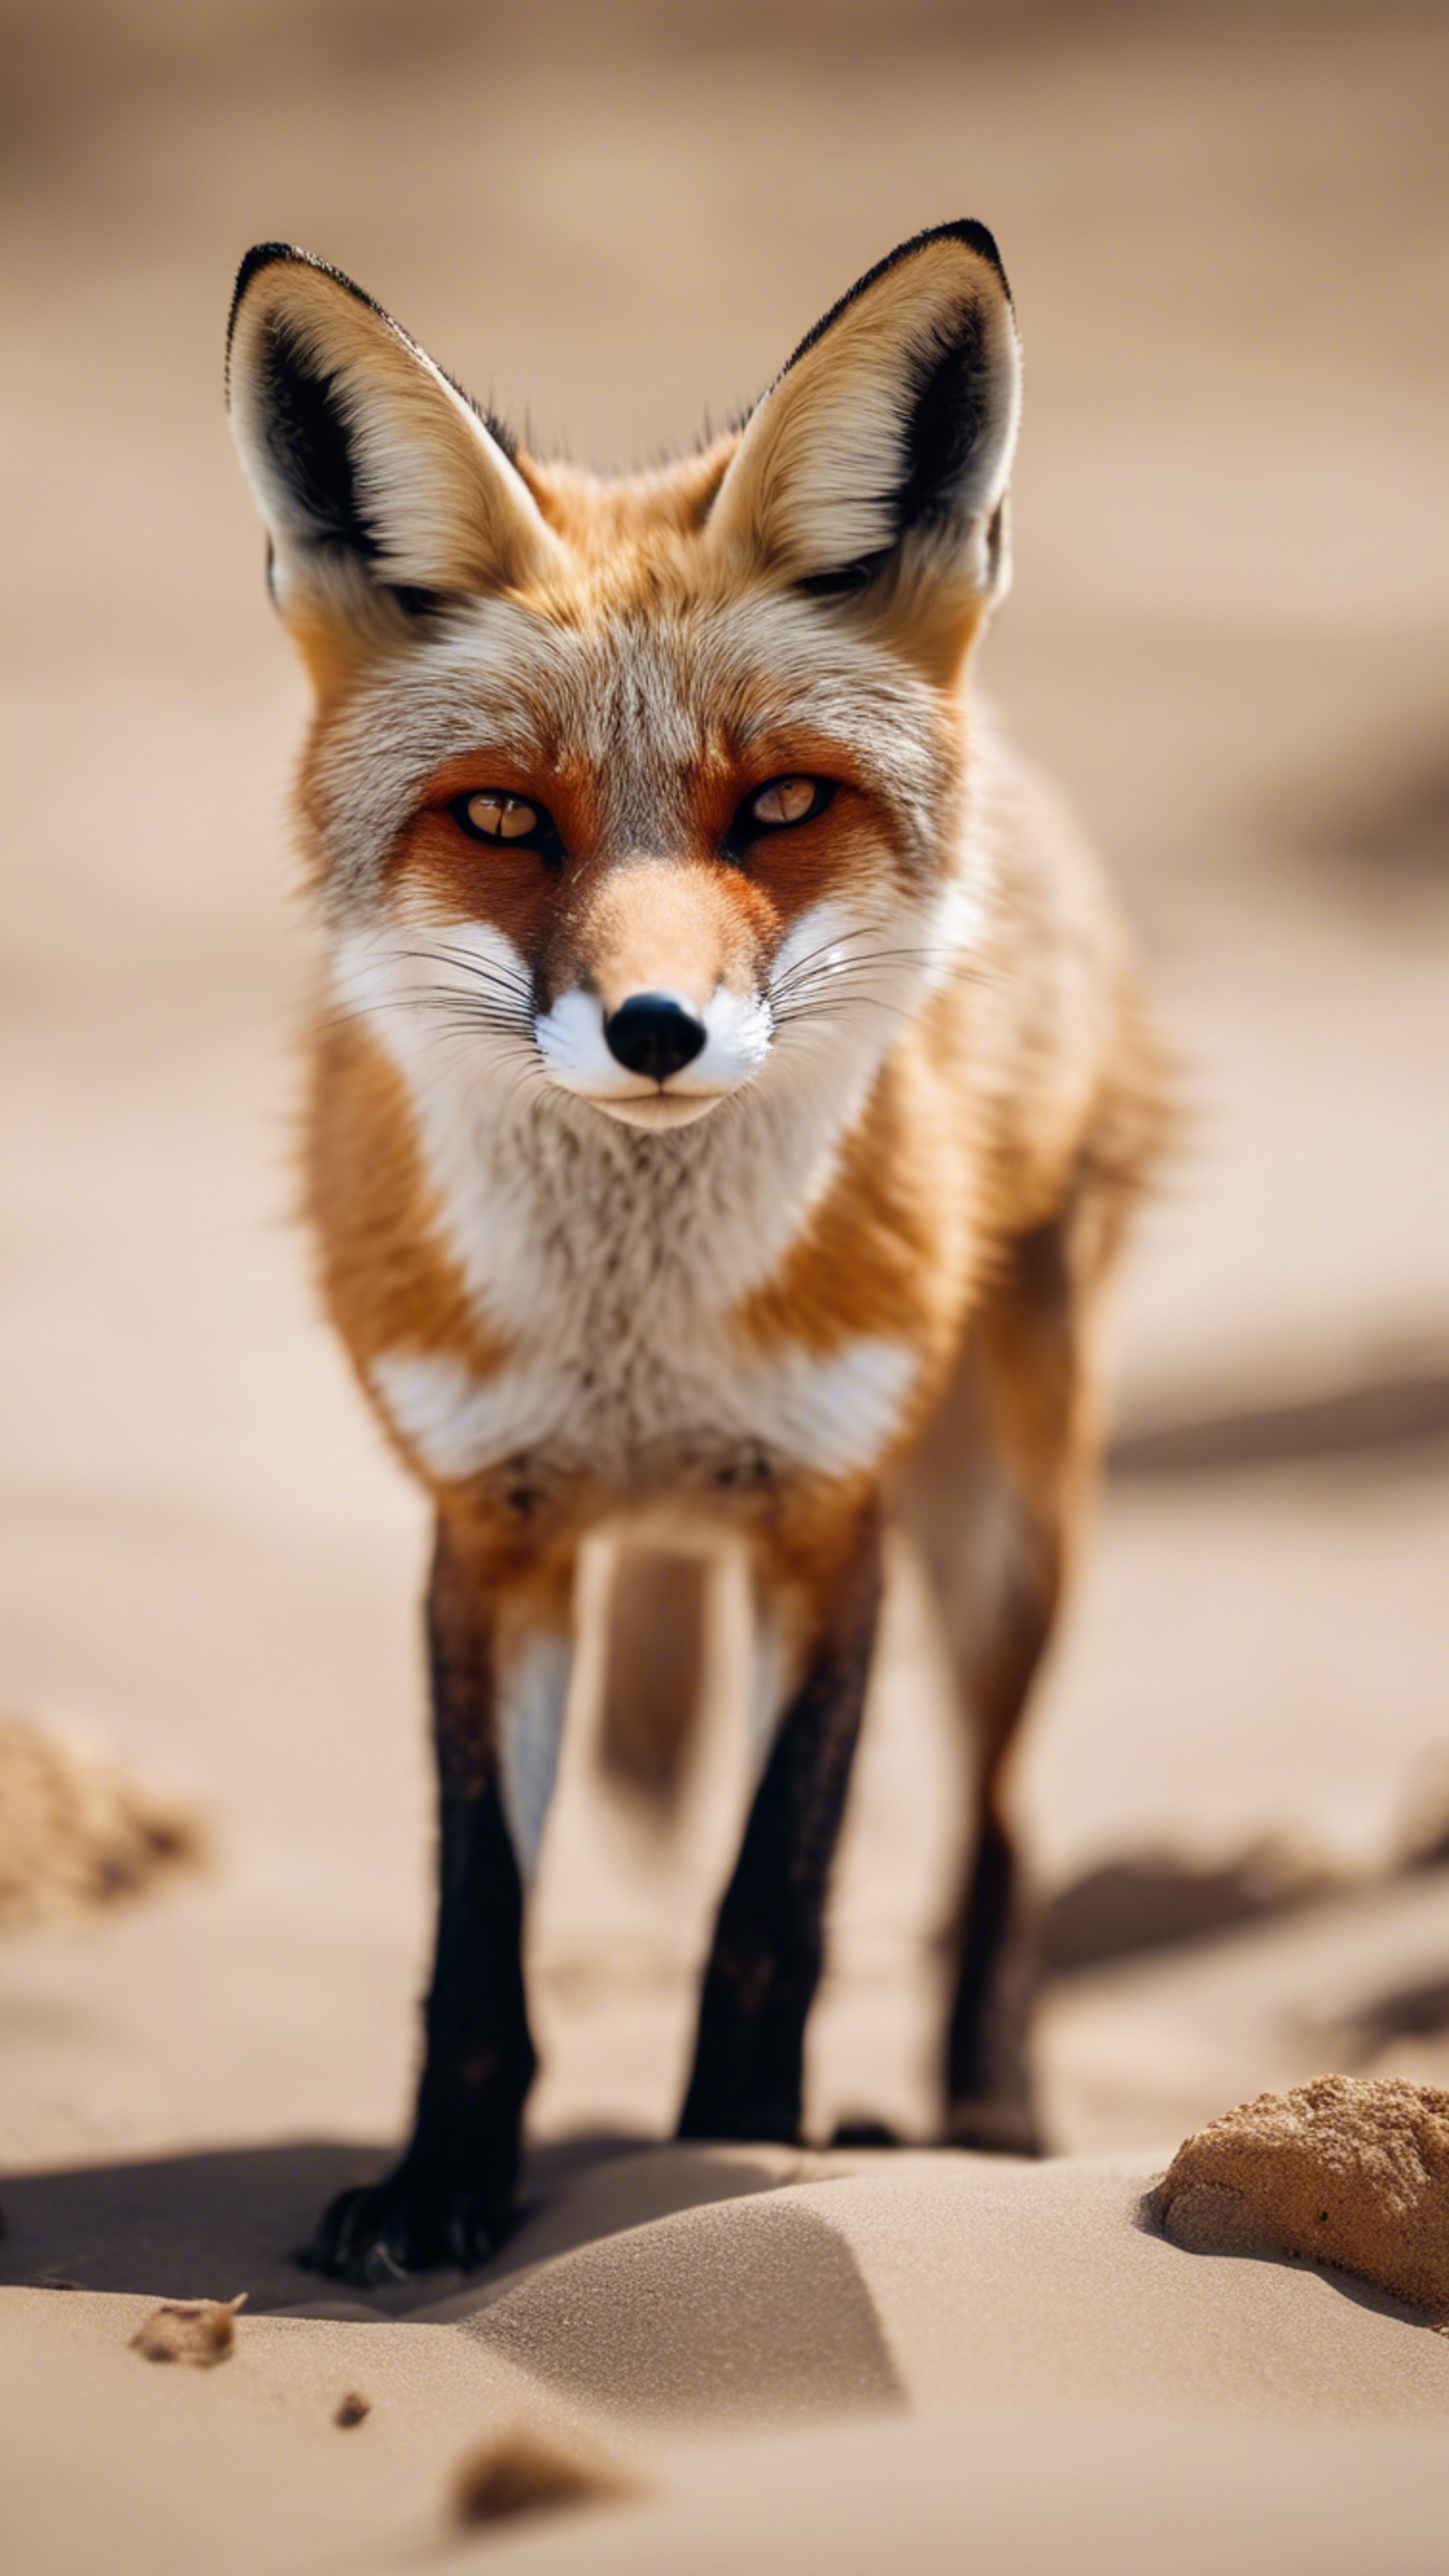 A lone desert fox in its natural habitat, roaming around amid the sand dunes. Tapet[17bb71b2b2bc40f18dca]